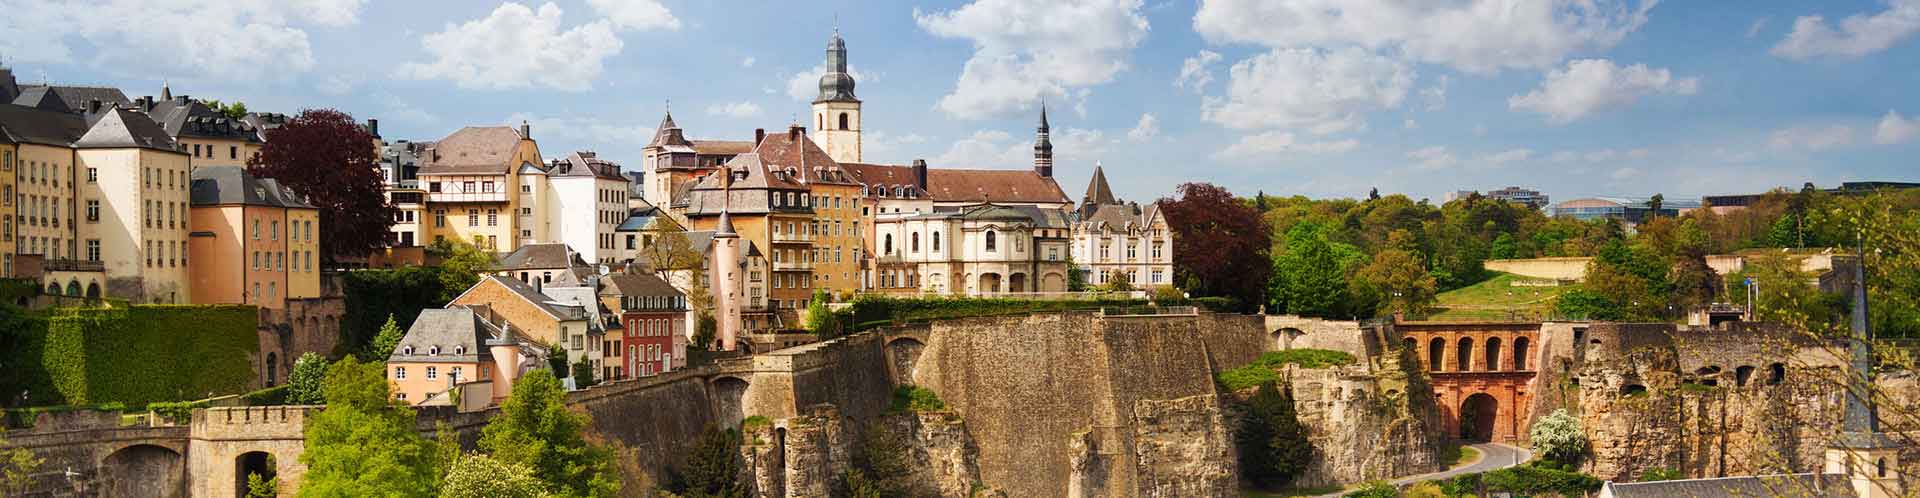 free tours luxemburgo